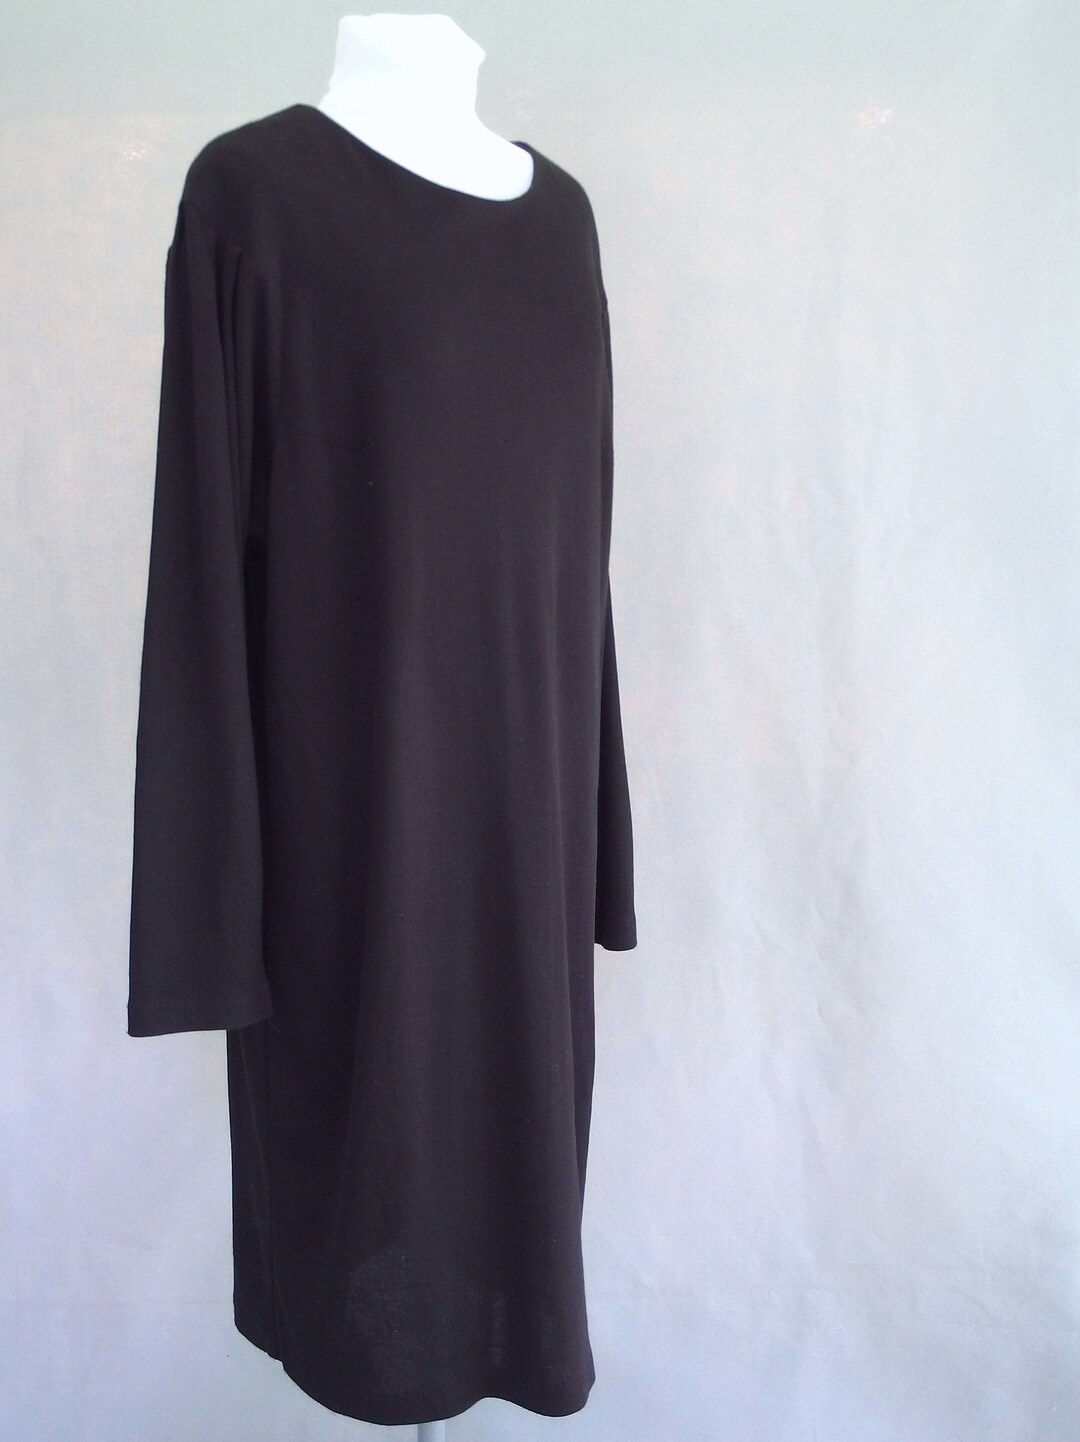 Black Knit Dress, Vintage 1980's Long Sleeve Dress, Fits Size 16, Large ...